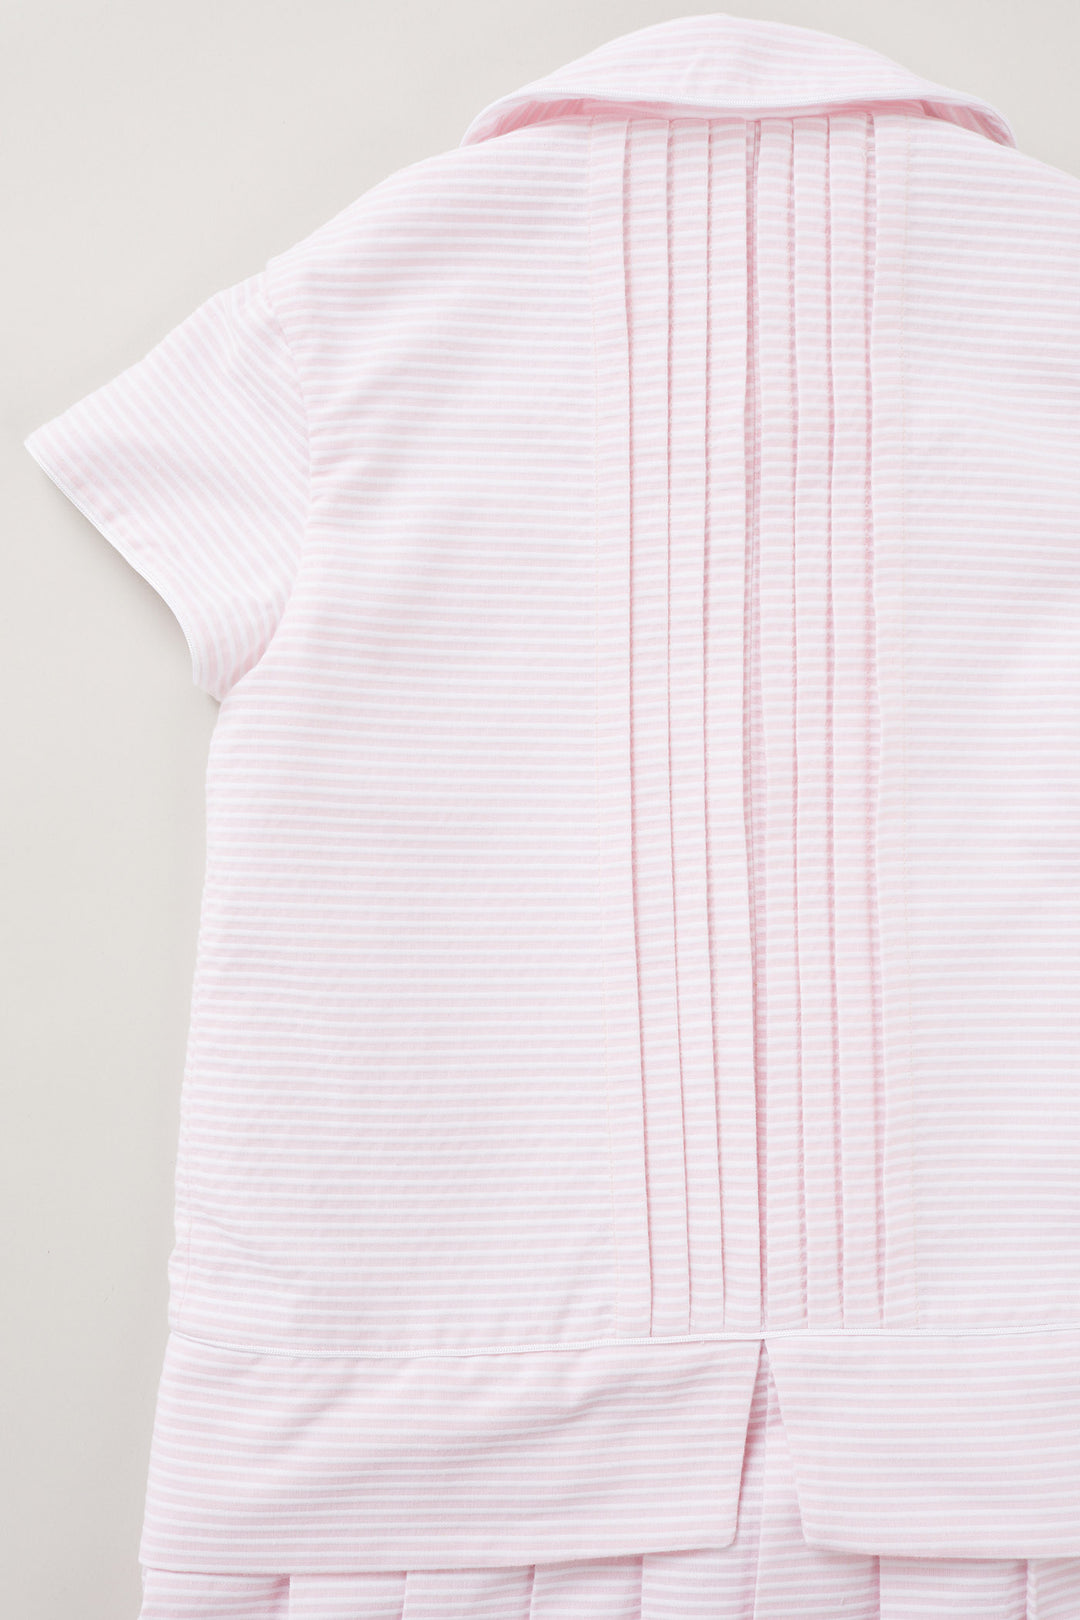 Pretzel Dress in Pink Stripes